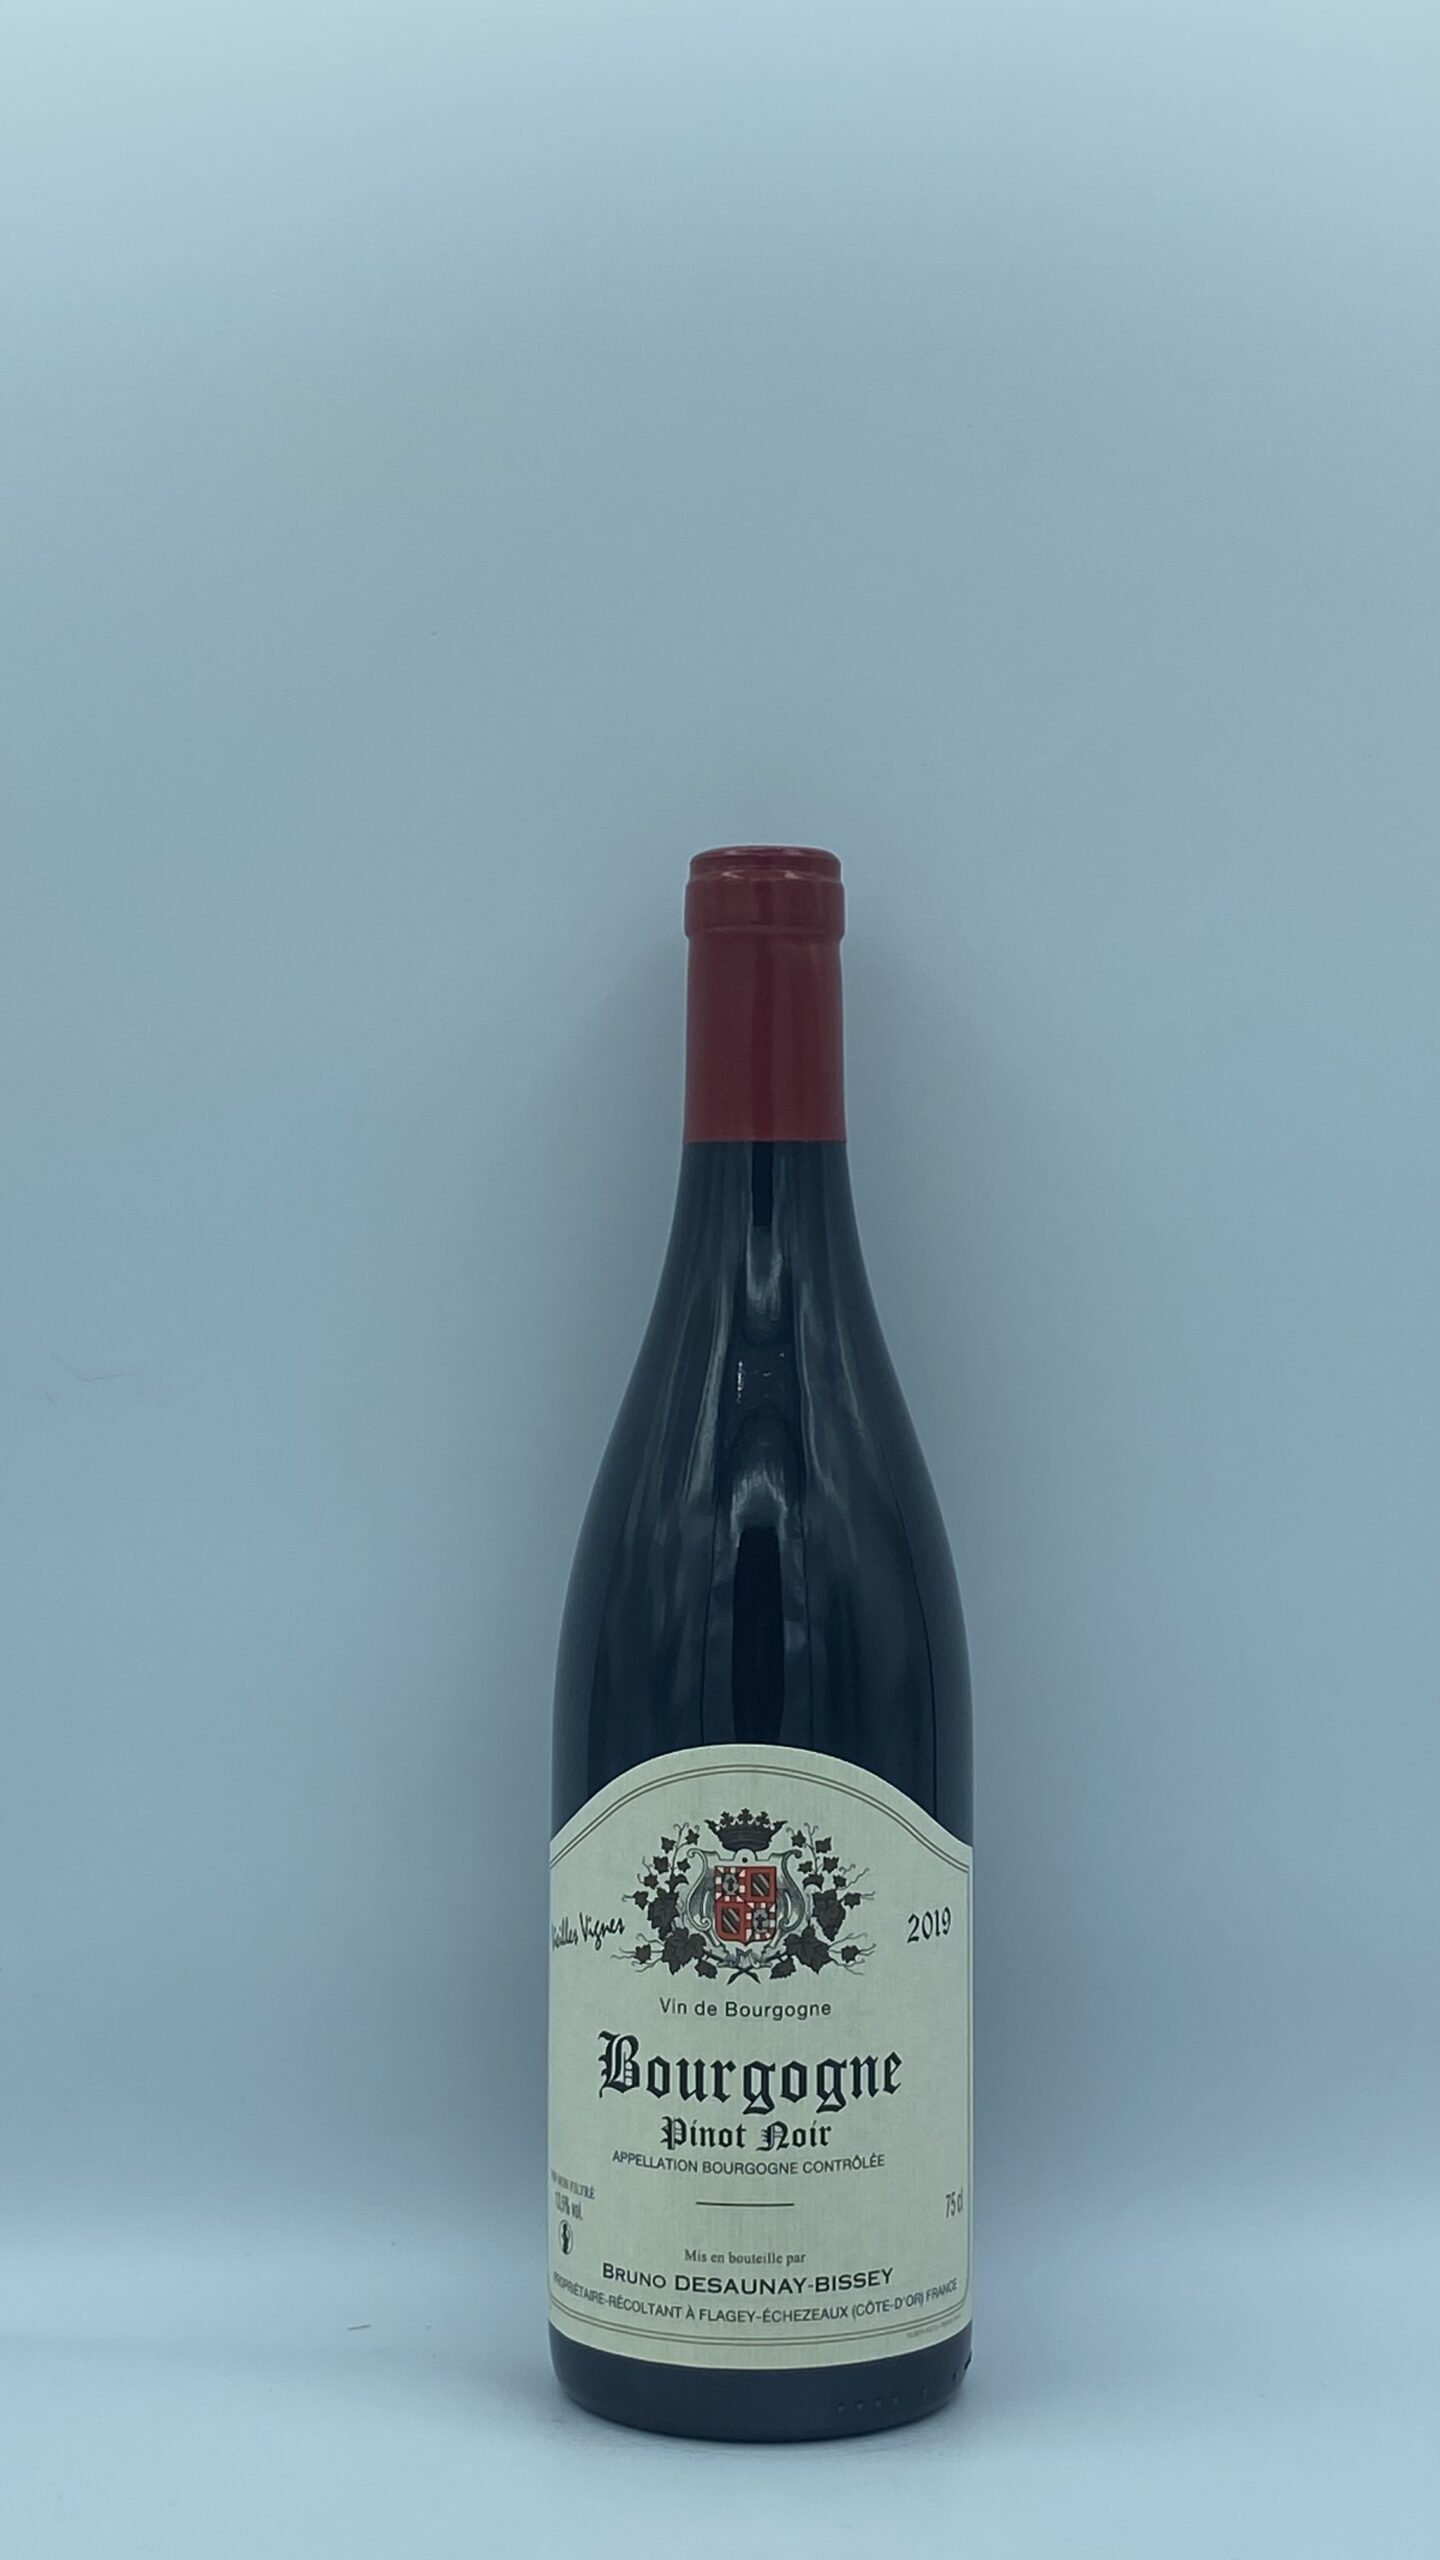 Bourgogne Pinot Noir 2019 Domaine Desaunay-Bissey